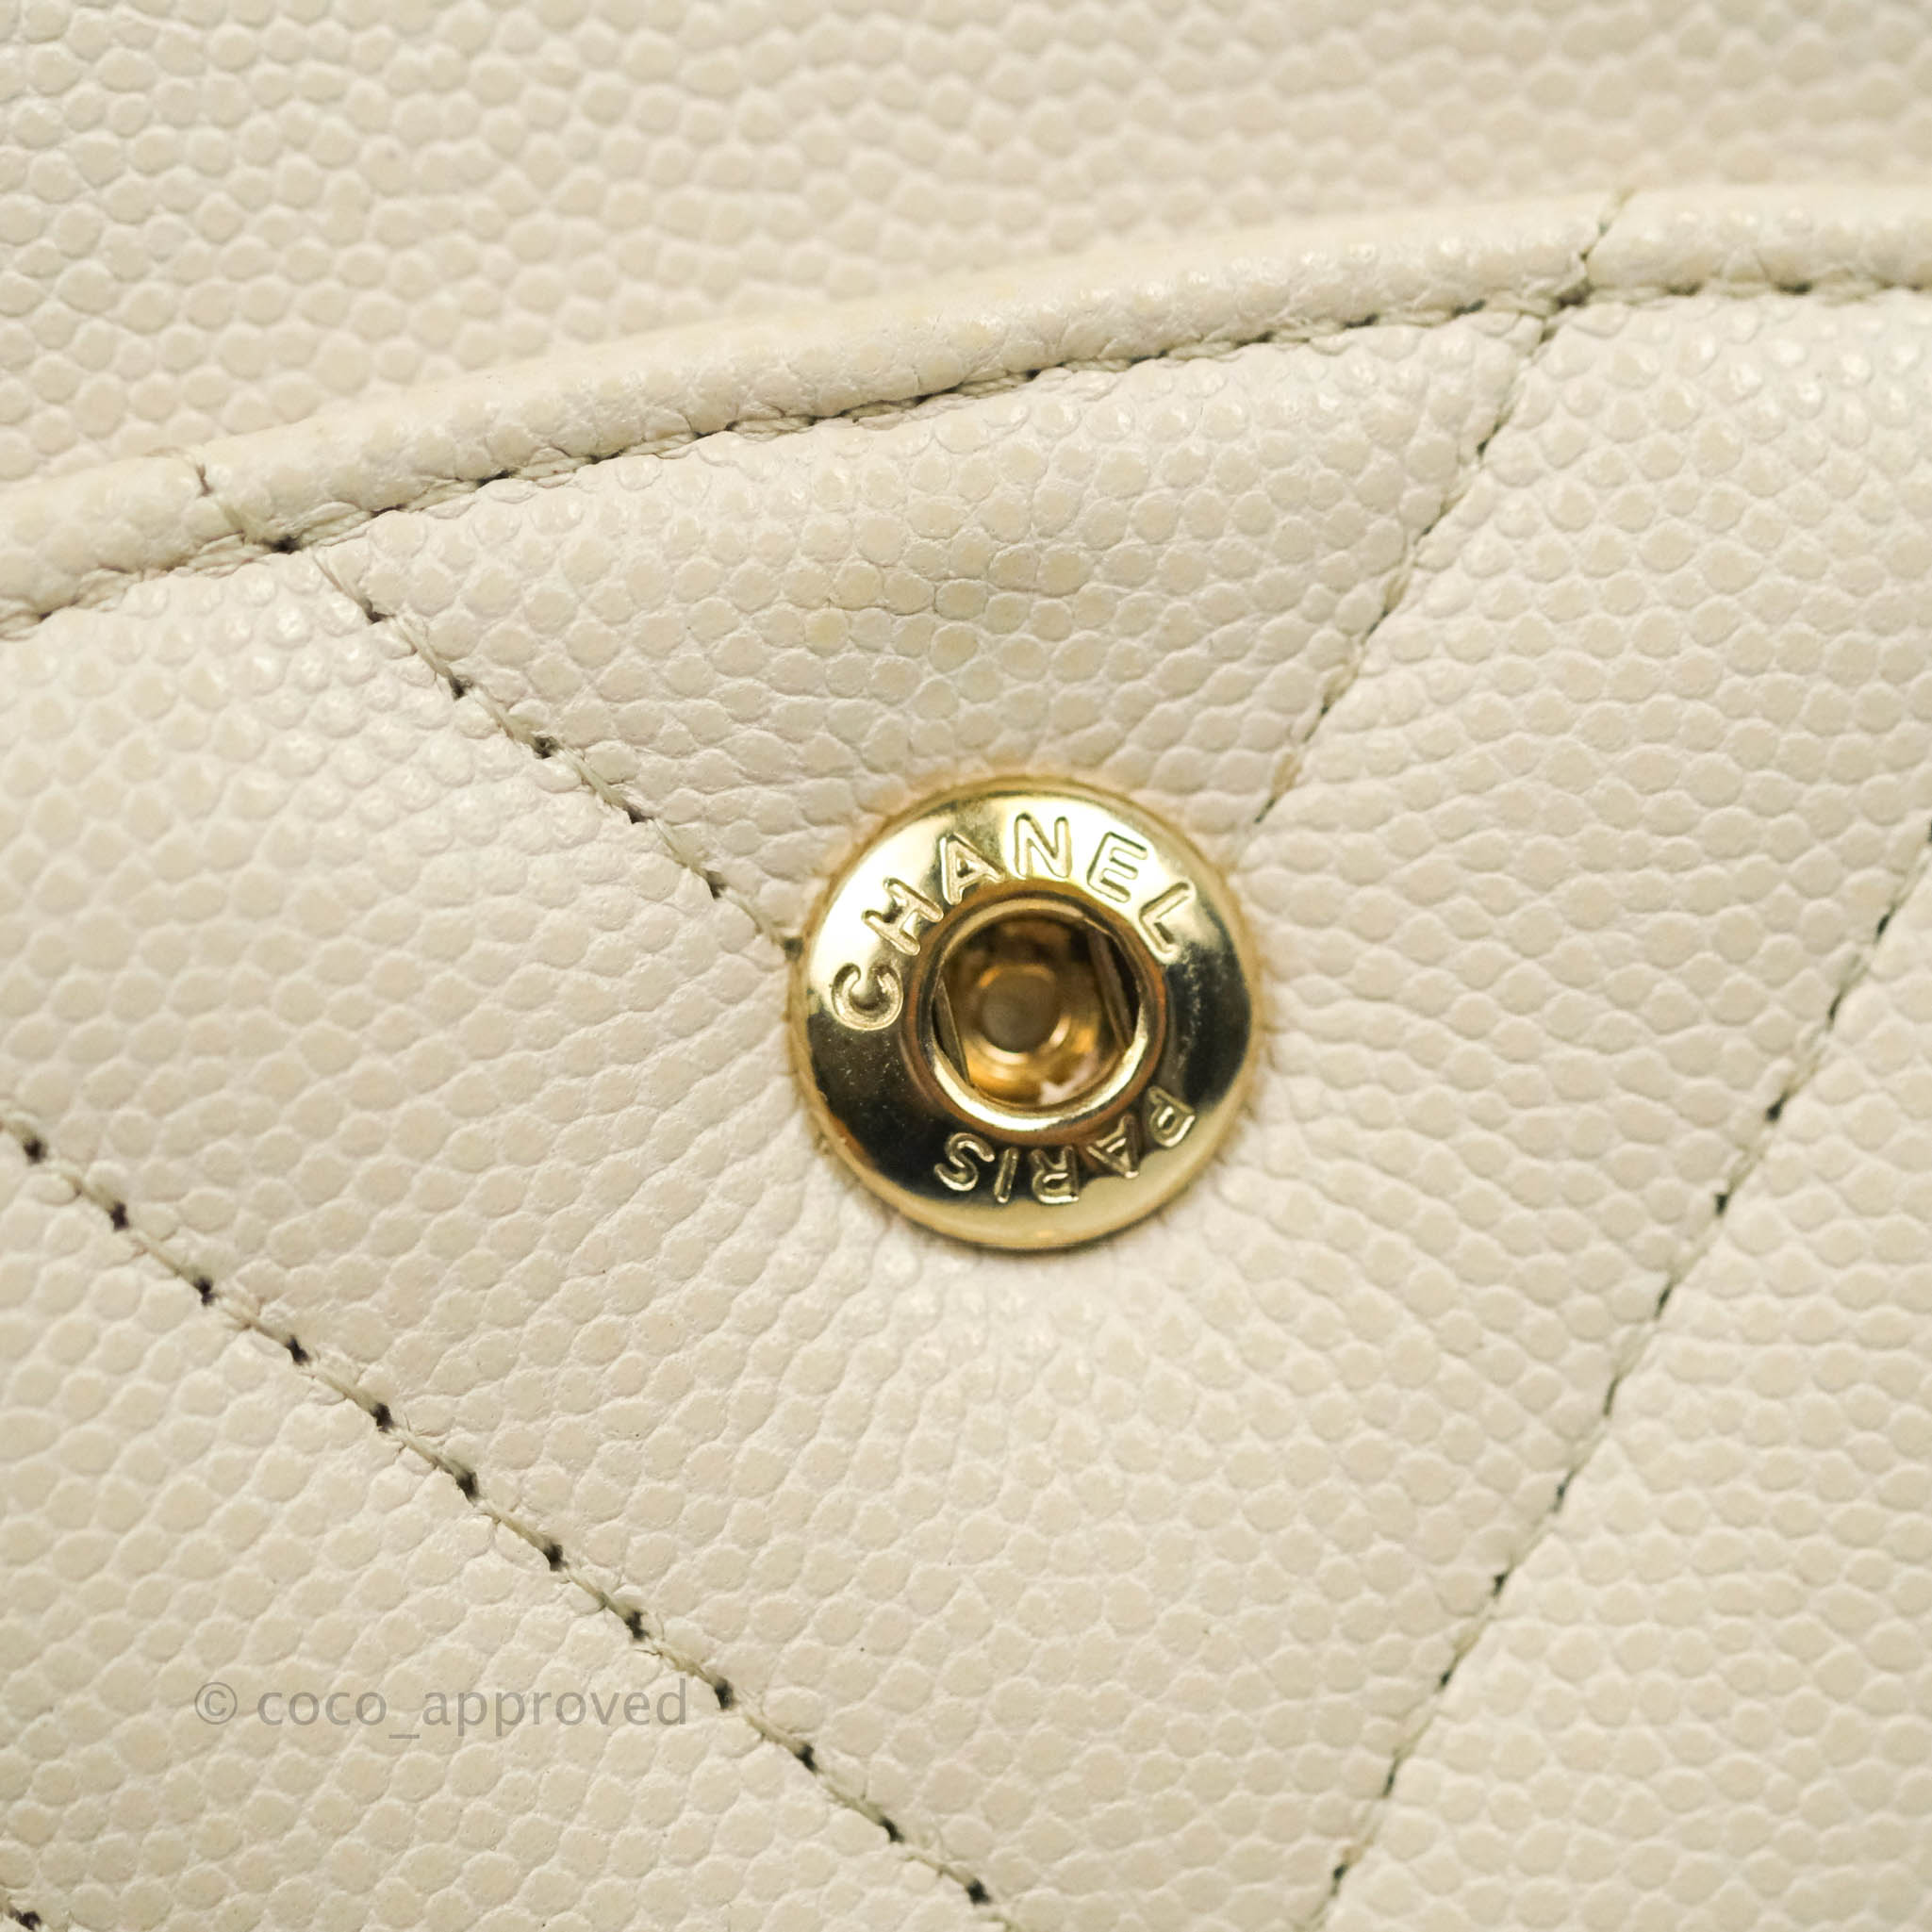 Chanel Classic Double Flap Bag Chevron Caviar Medium Yellow 410191